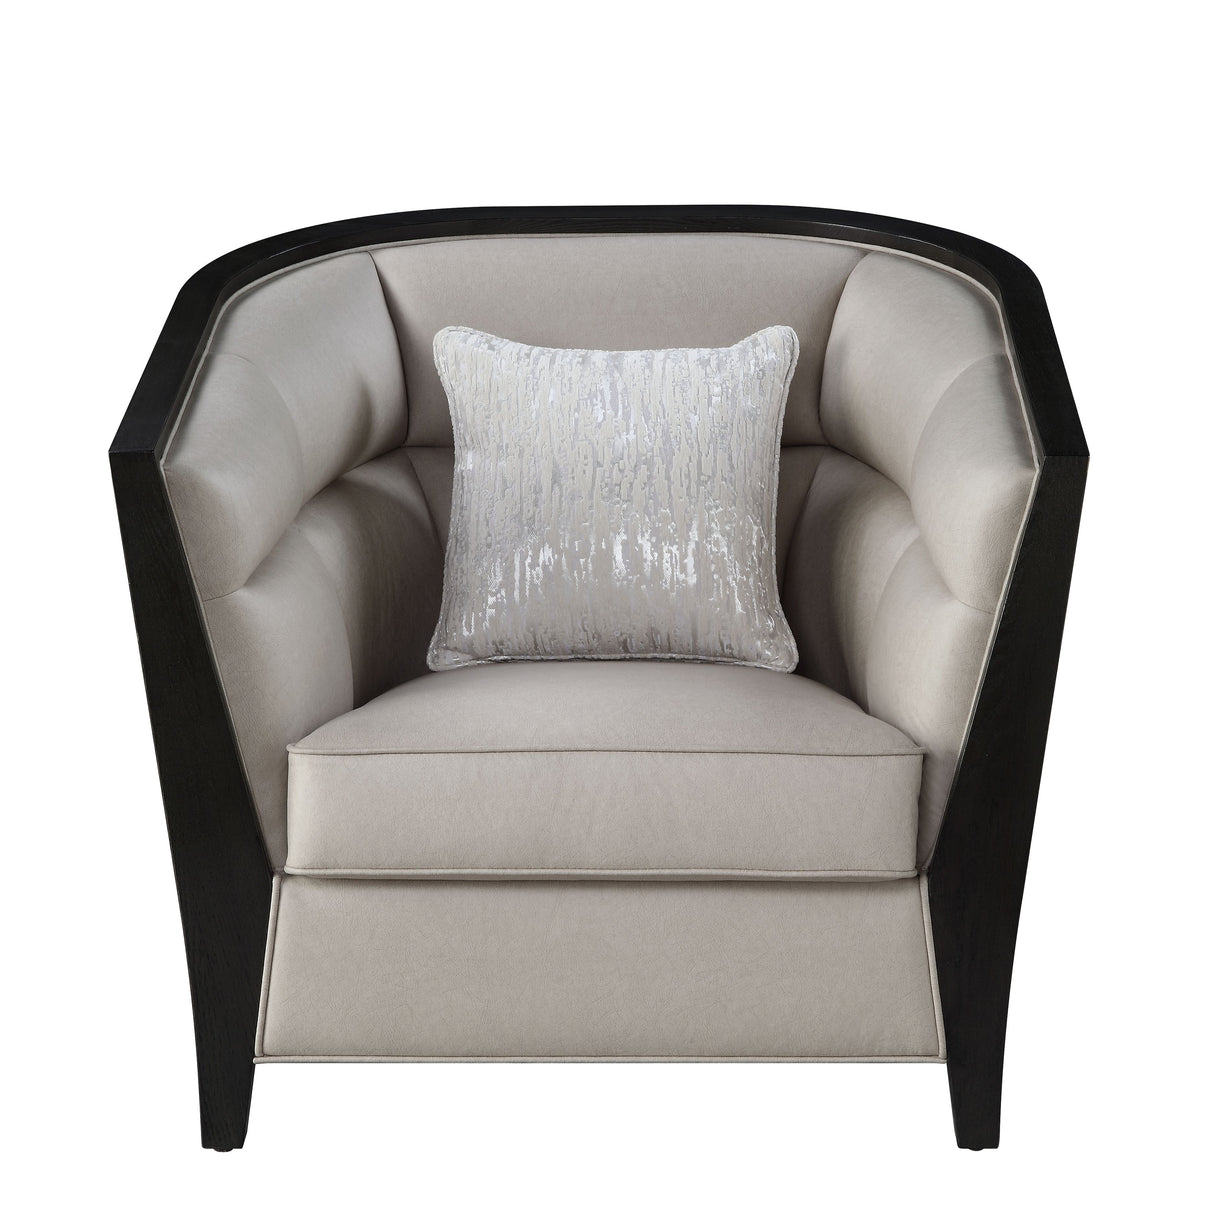 Acme - Zemocryss Chair W/Pillow 54237 Beige Fabric